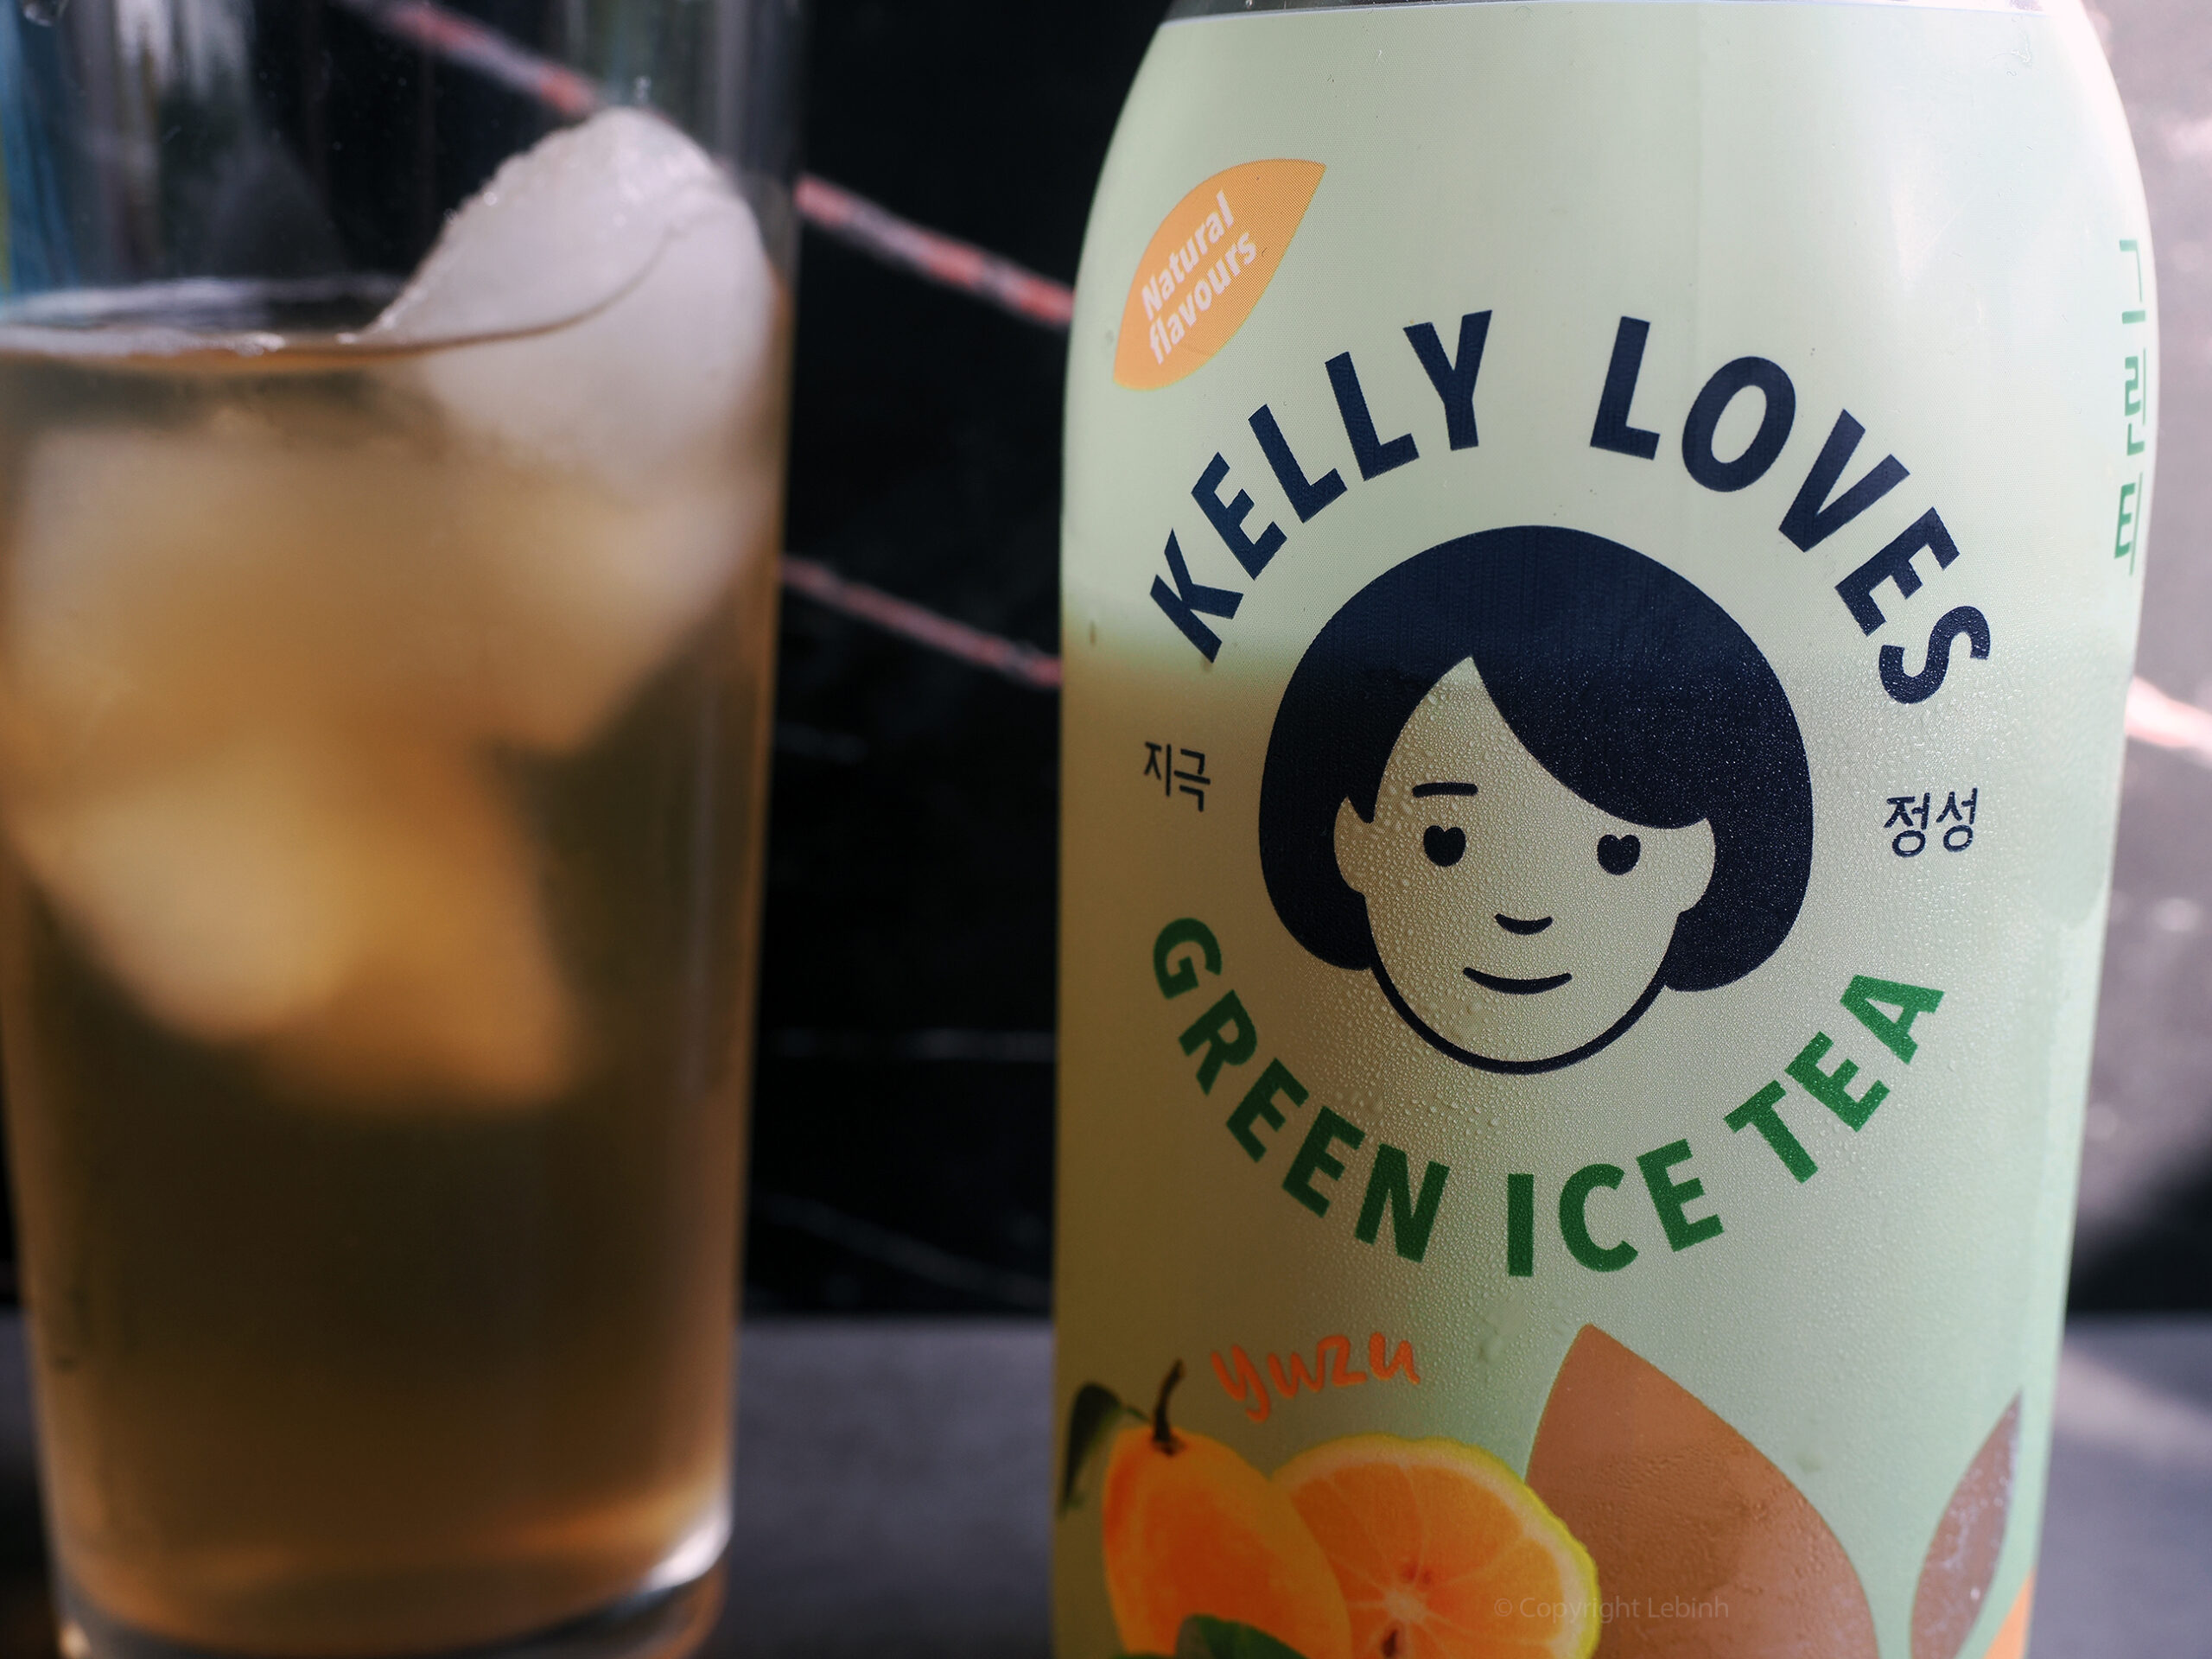 Kelly Loves yuzu tea 500ml bottle close up